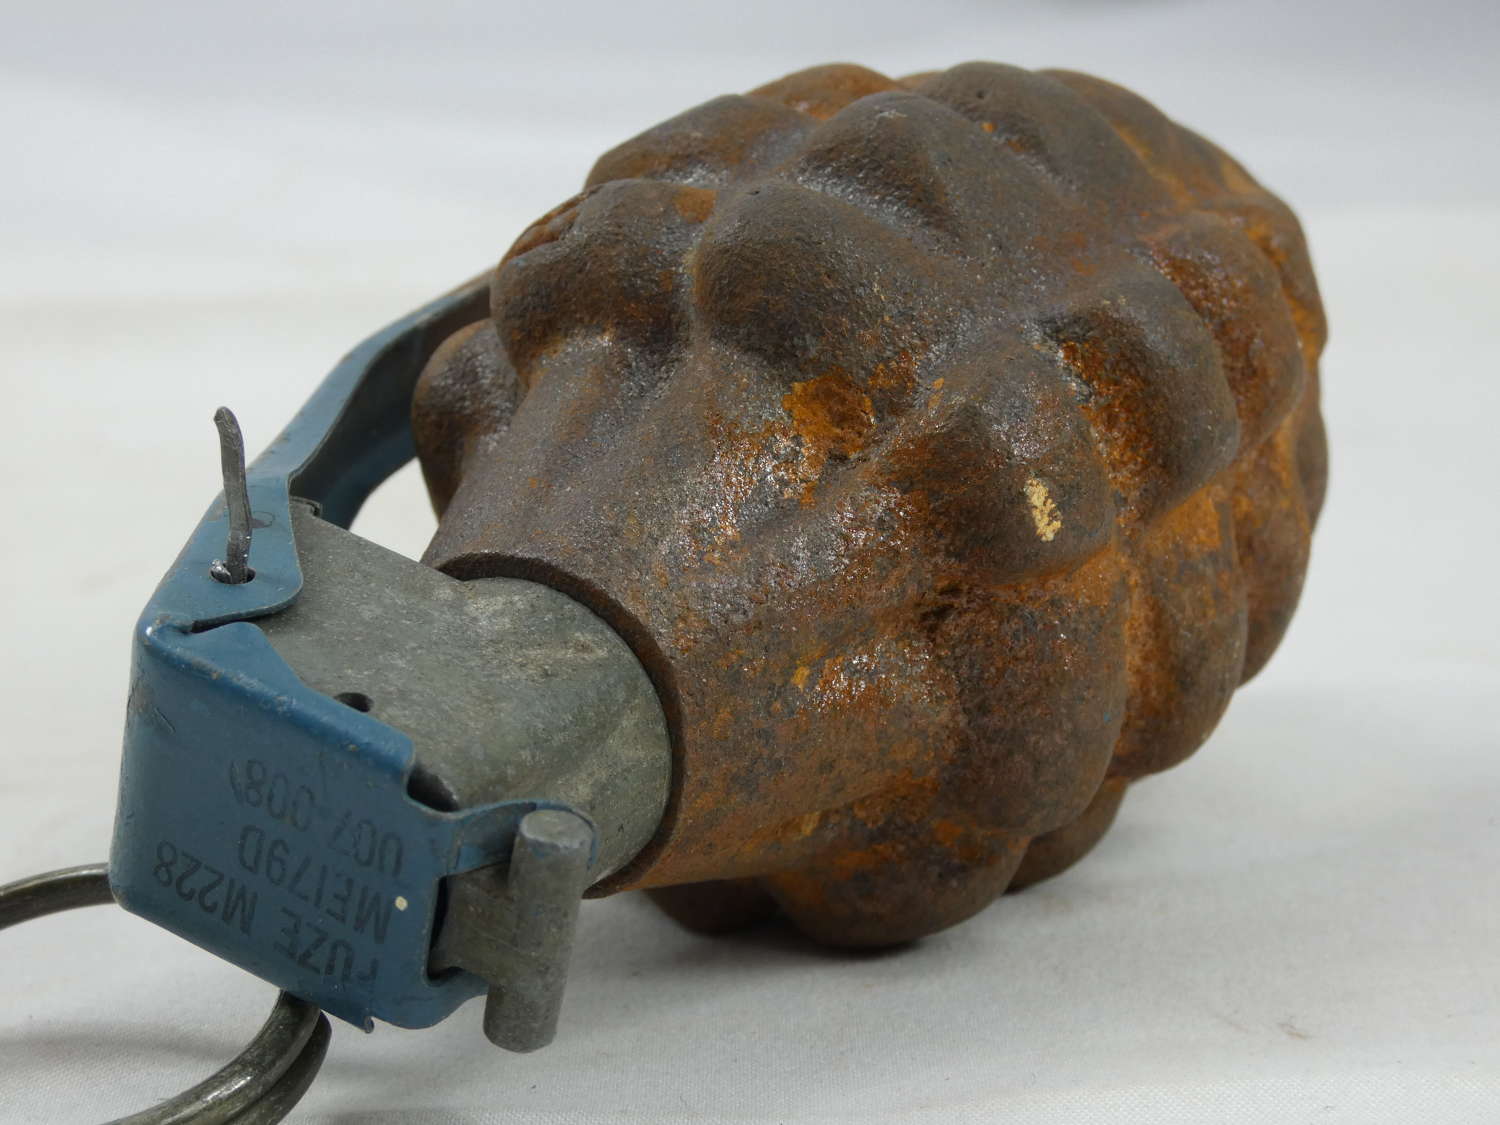 WW2 Replica U.S. Pineapple Grenade